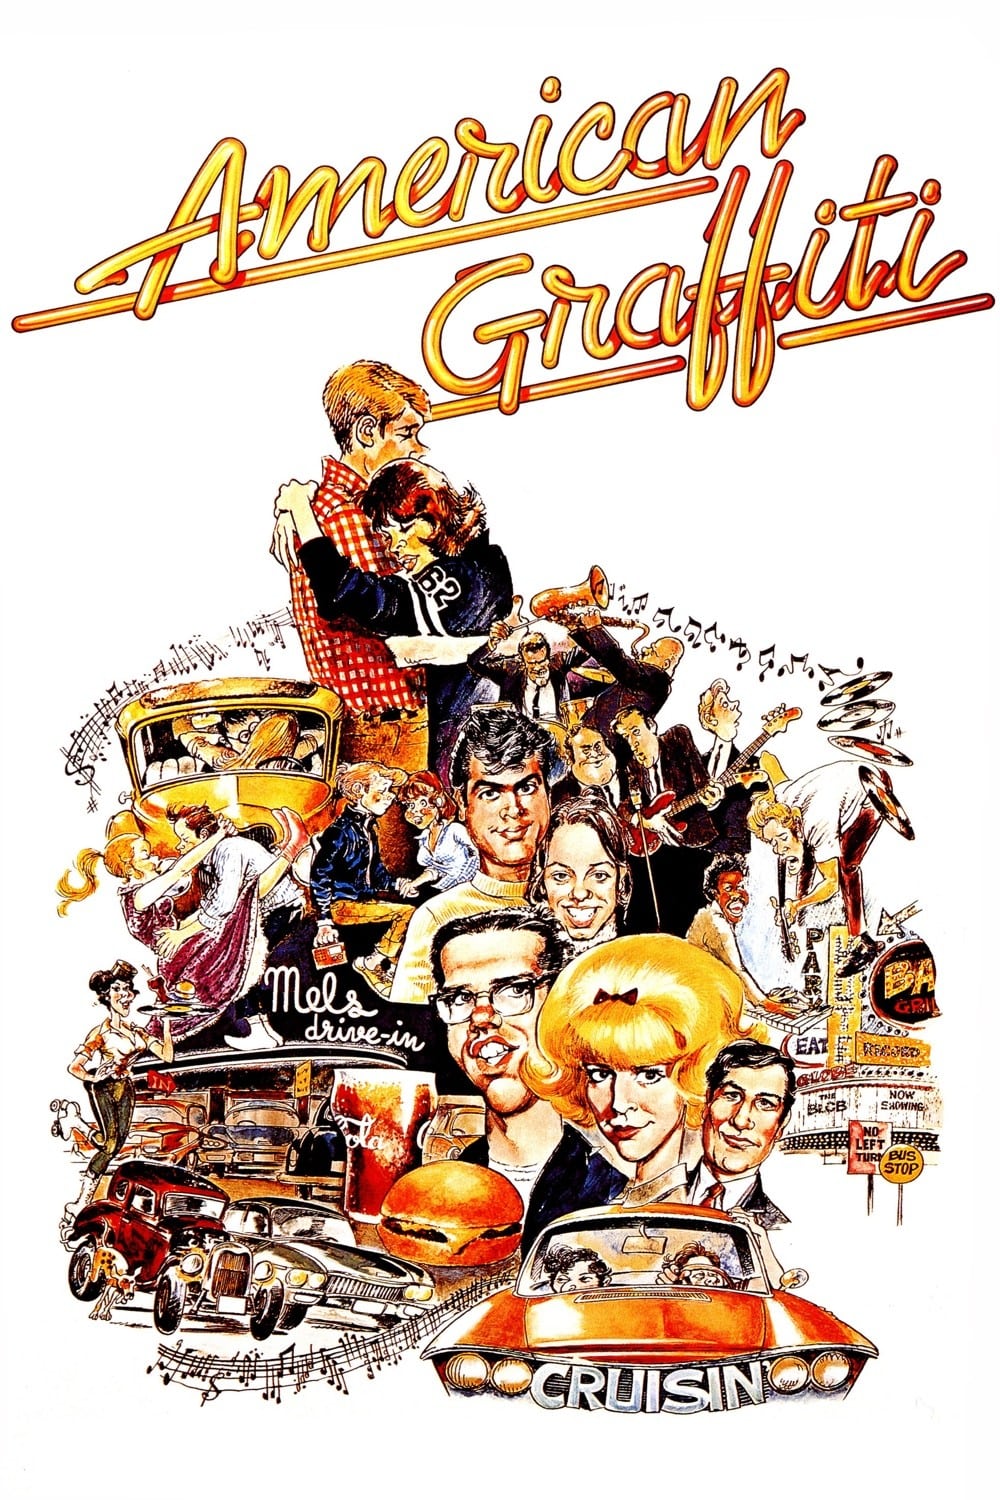 Poster for the movie "American Graffiti"